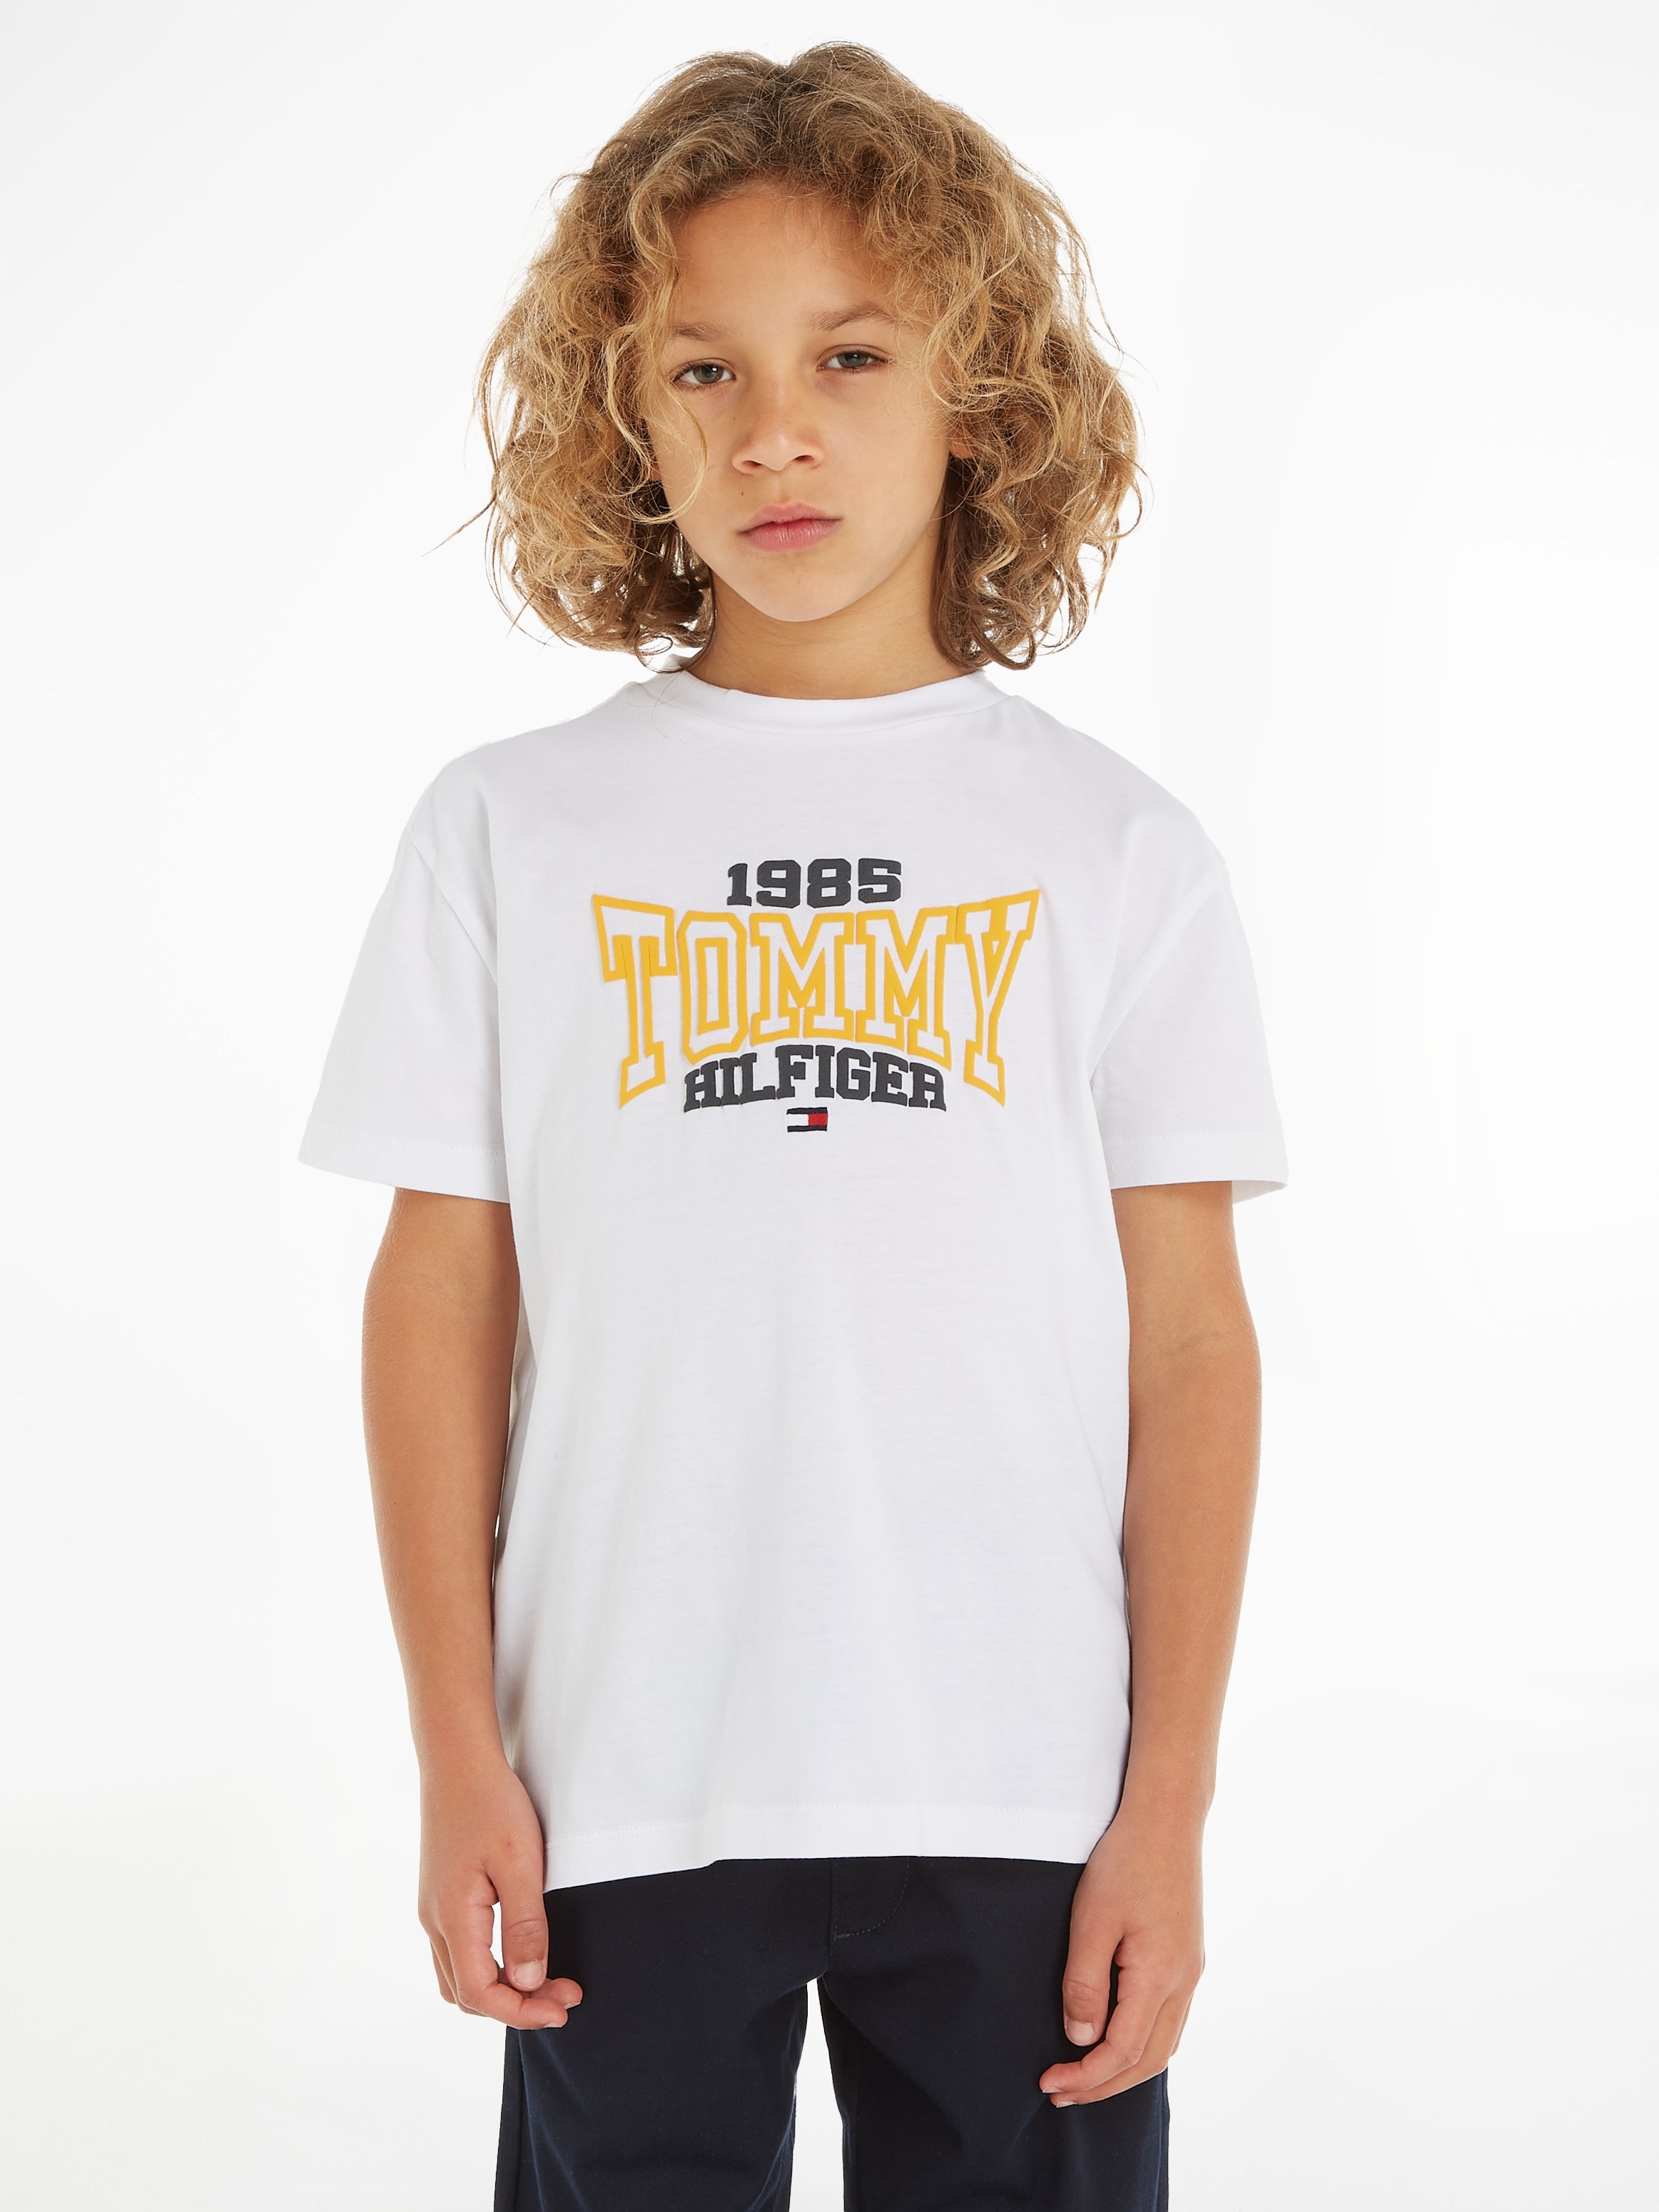 Tommy Hilfiger T-Shirt »TOMMY bei 1985 mit VARSITY S/S«, Print Hilfgier Tommy Varsity TEE modischem 1985